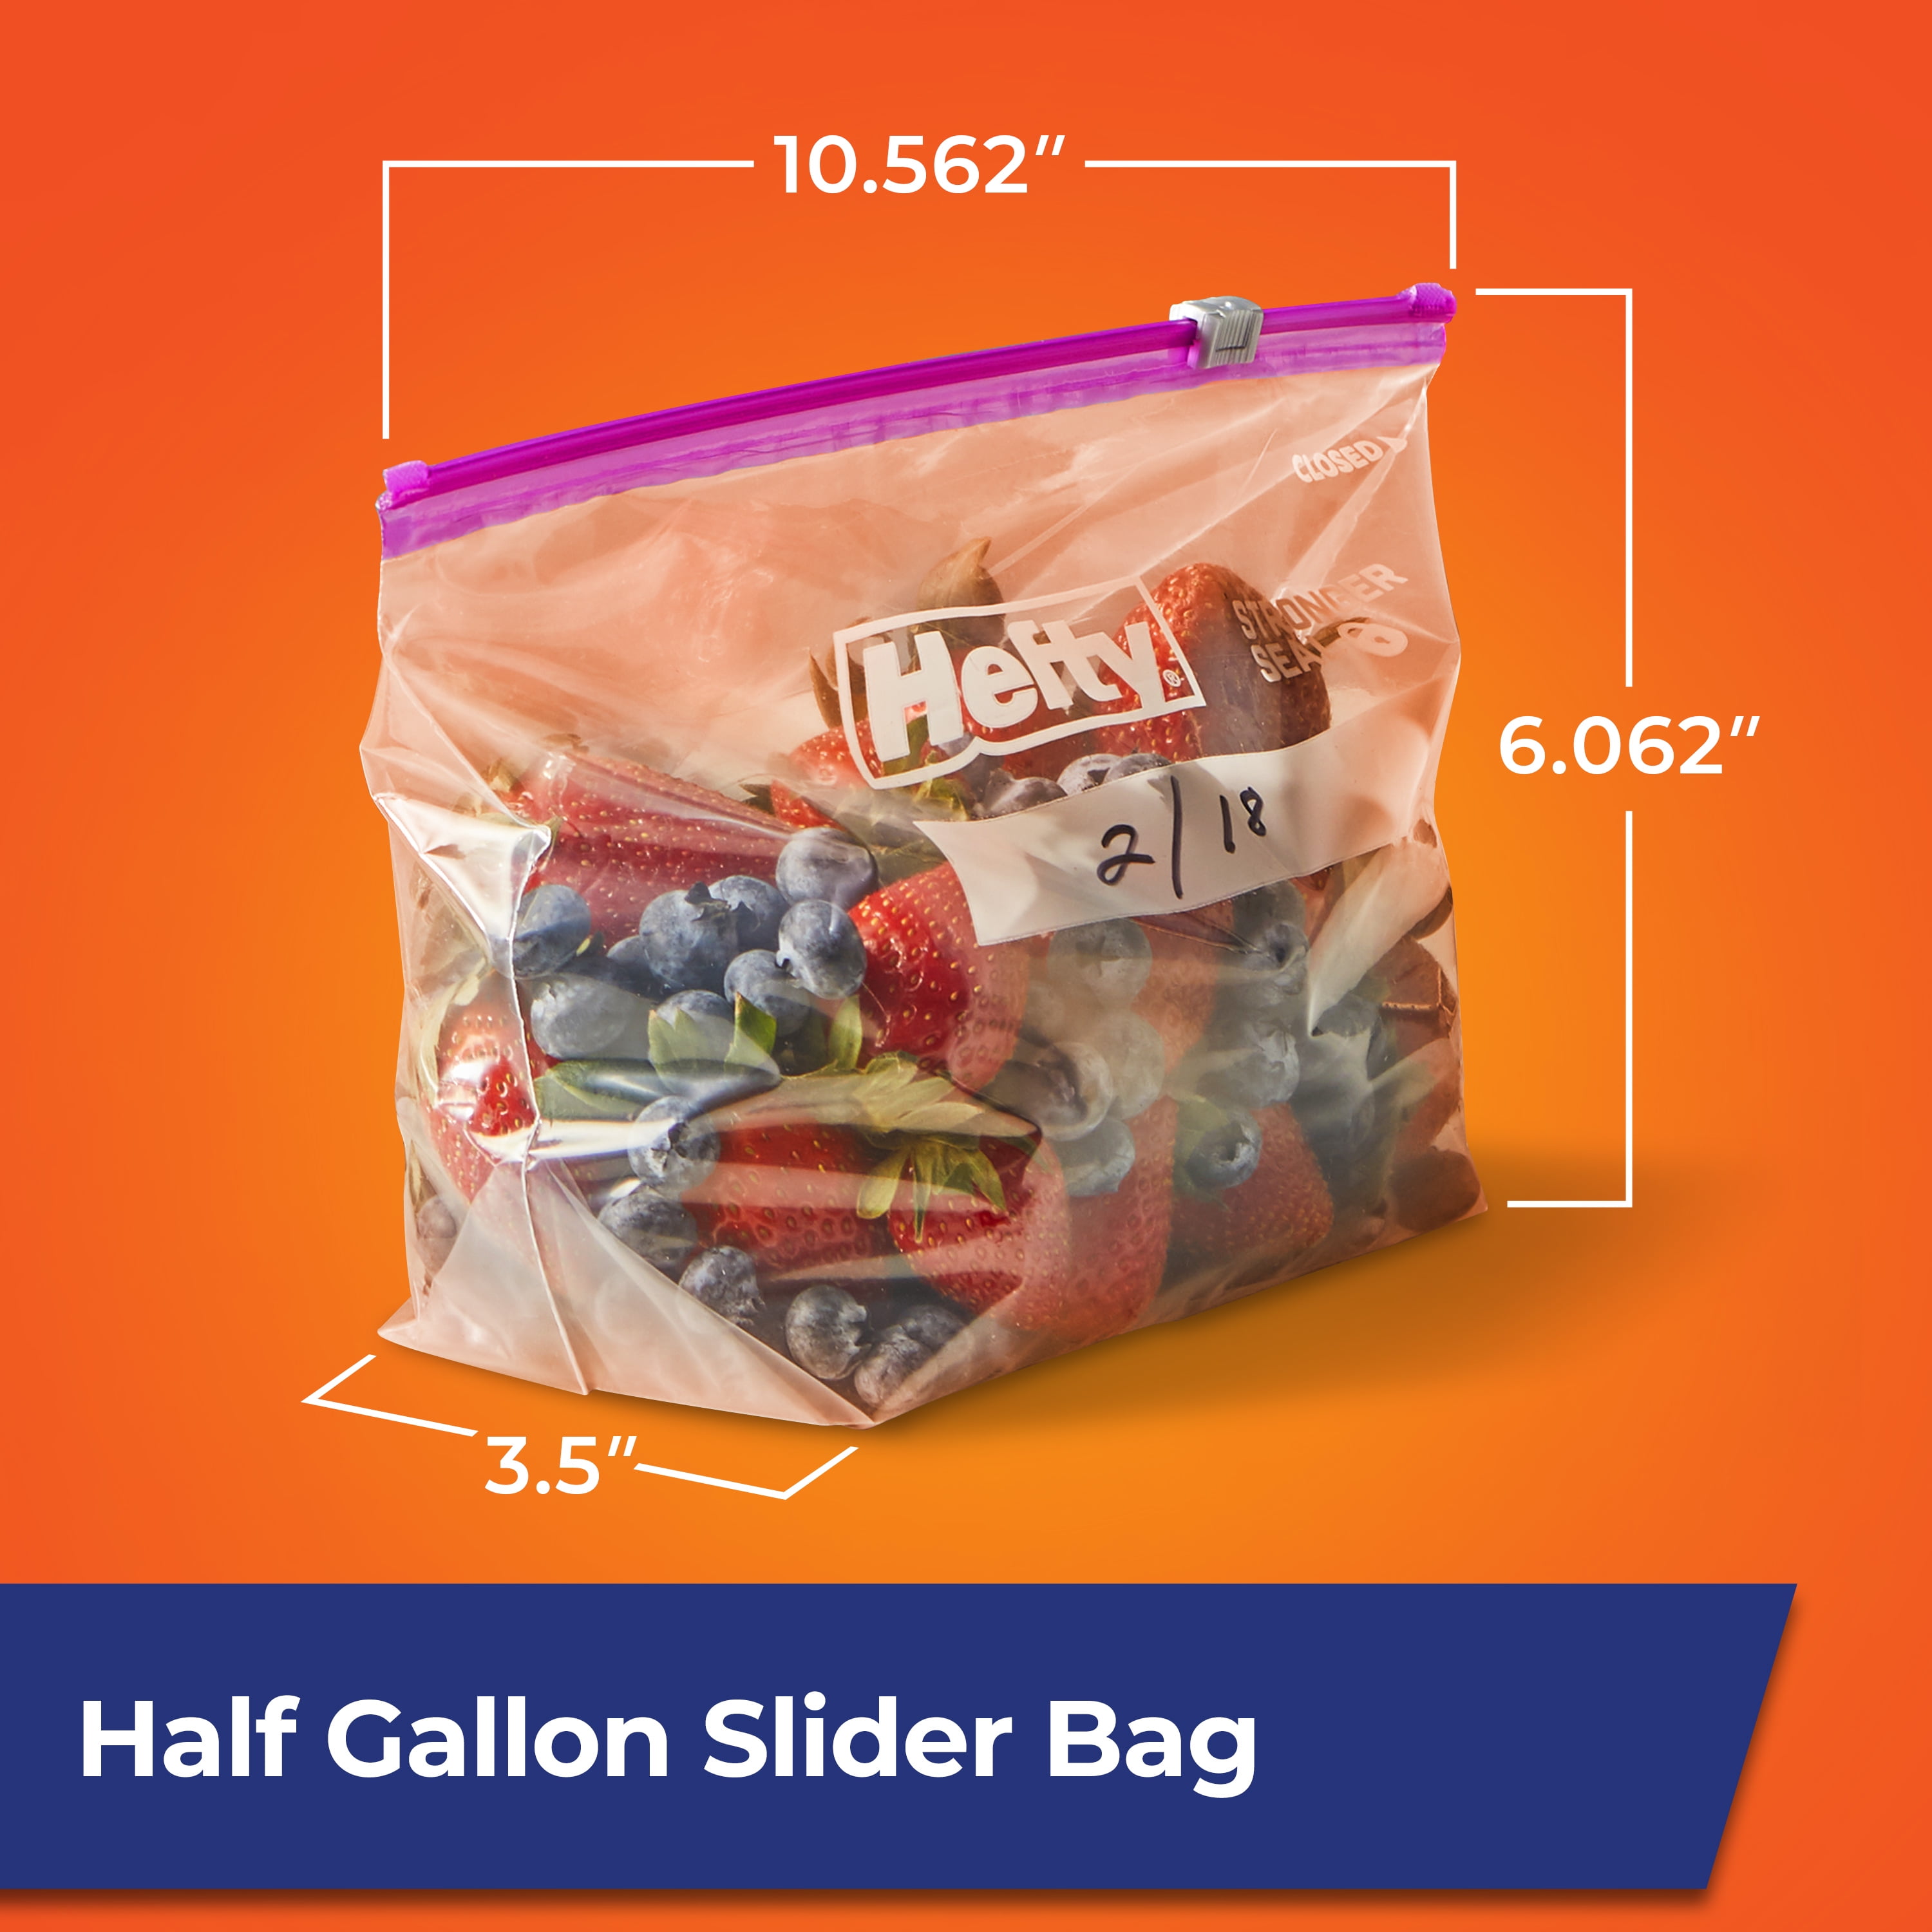 Hefty Slider Storage Calendar Bags, Quart Size, 40 Count (Pack of 4)